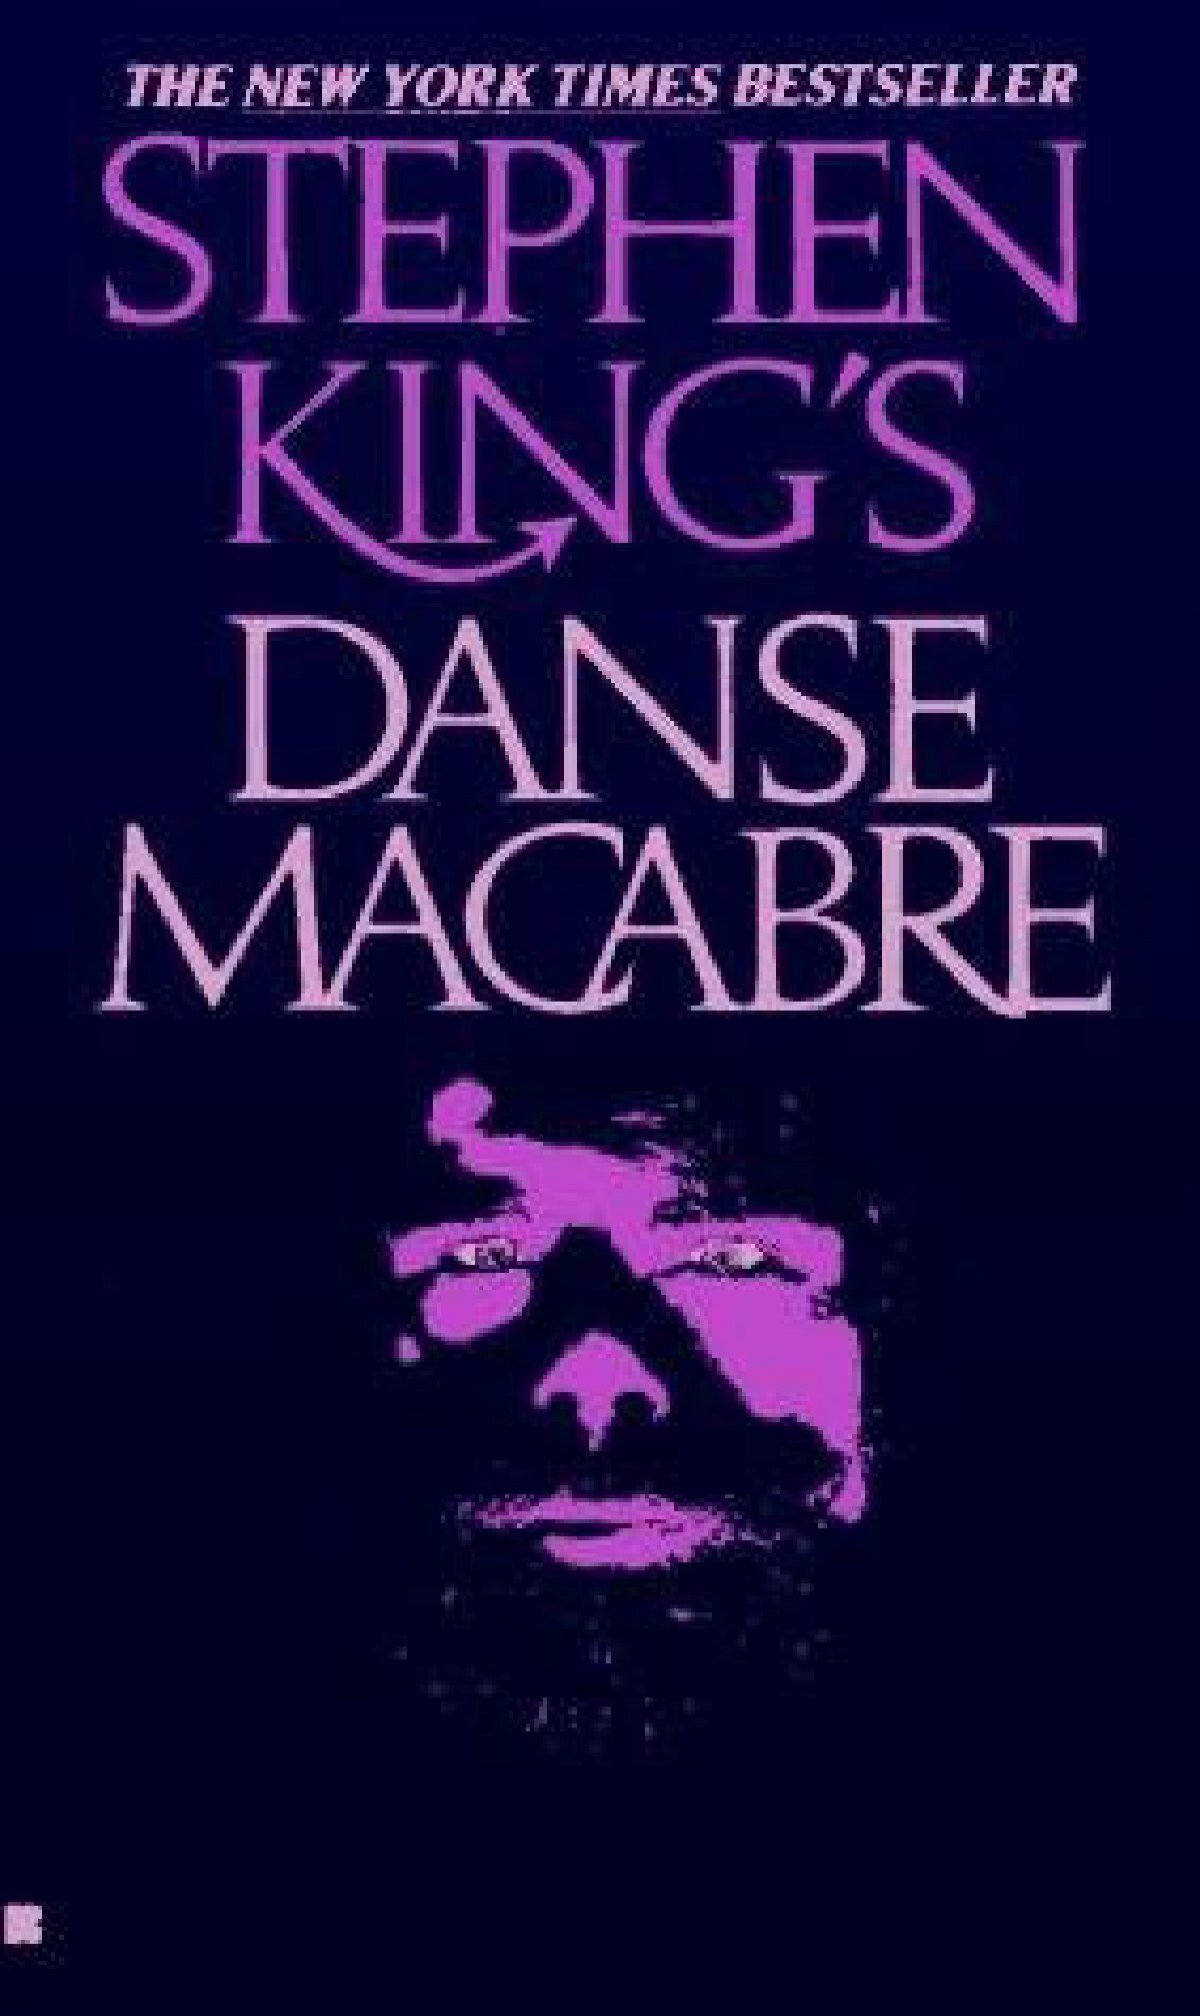 King Stephen Danse Macabre Pdf Retro Cafe